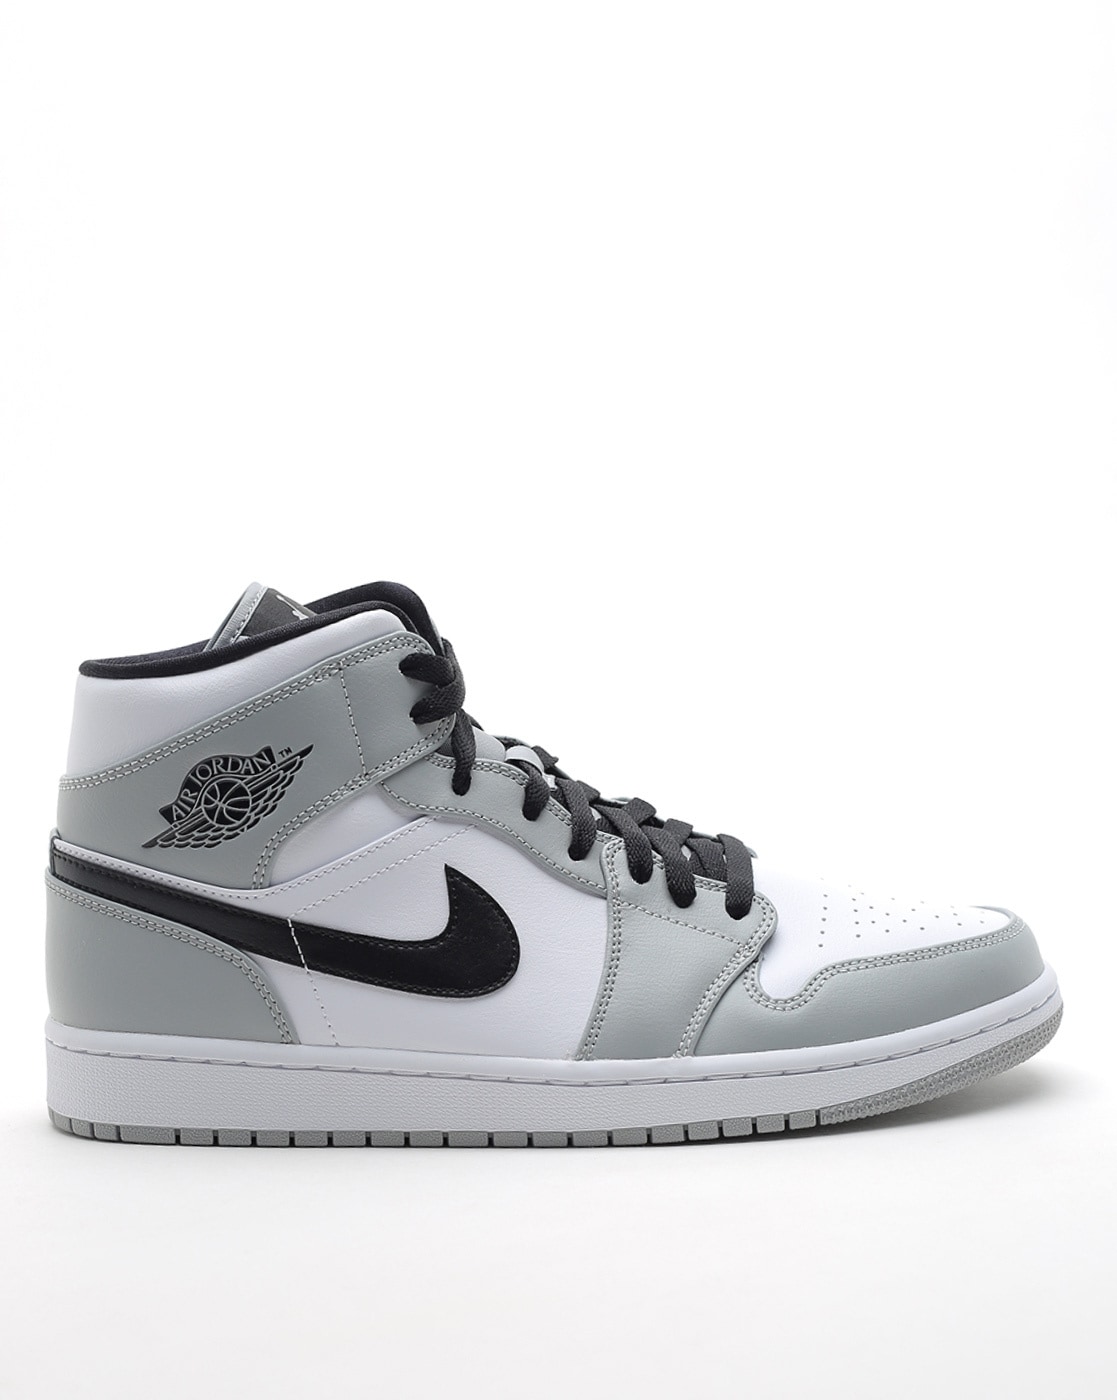 Buy Nike Mens AIR Jordan 1 MID WhiteSport REDGreyElectric Green Leather  Sneaker 554724122 at Amazonin